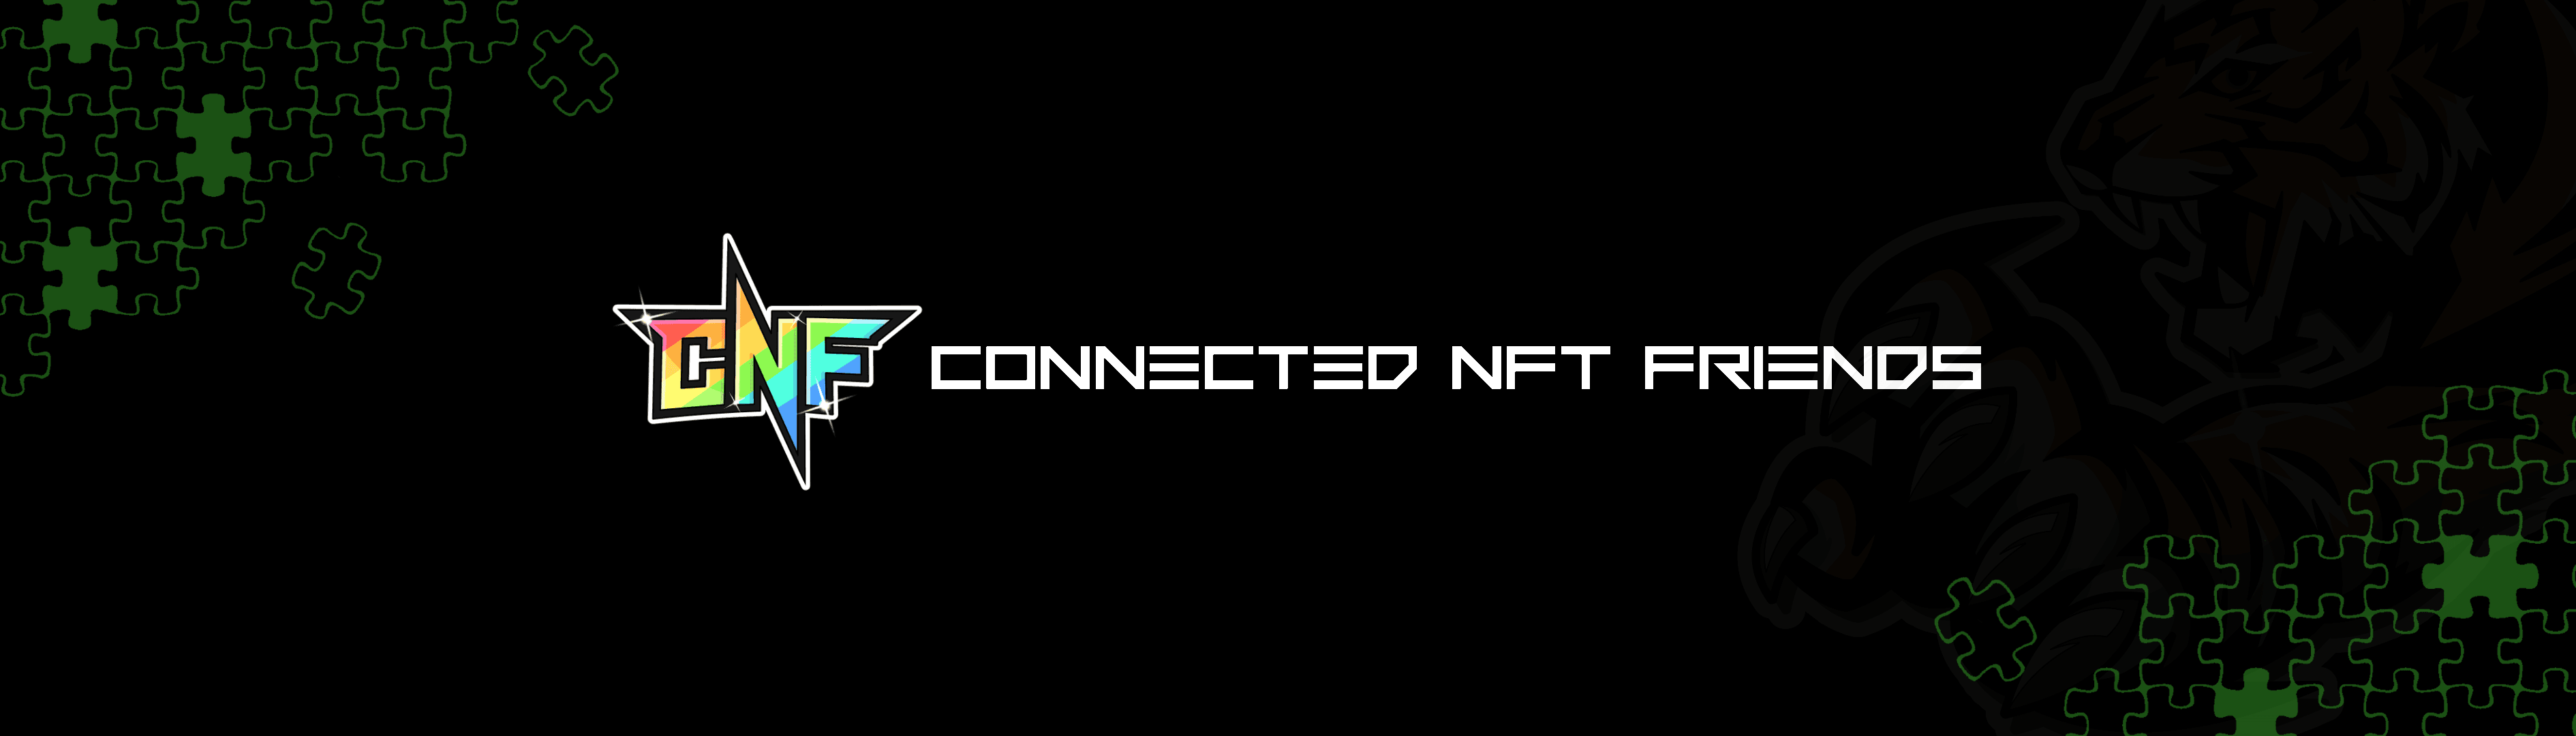 Connected_NFT_Friends banner